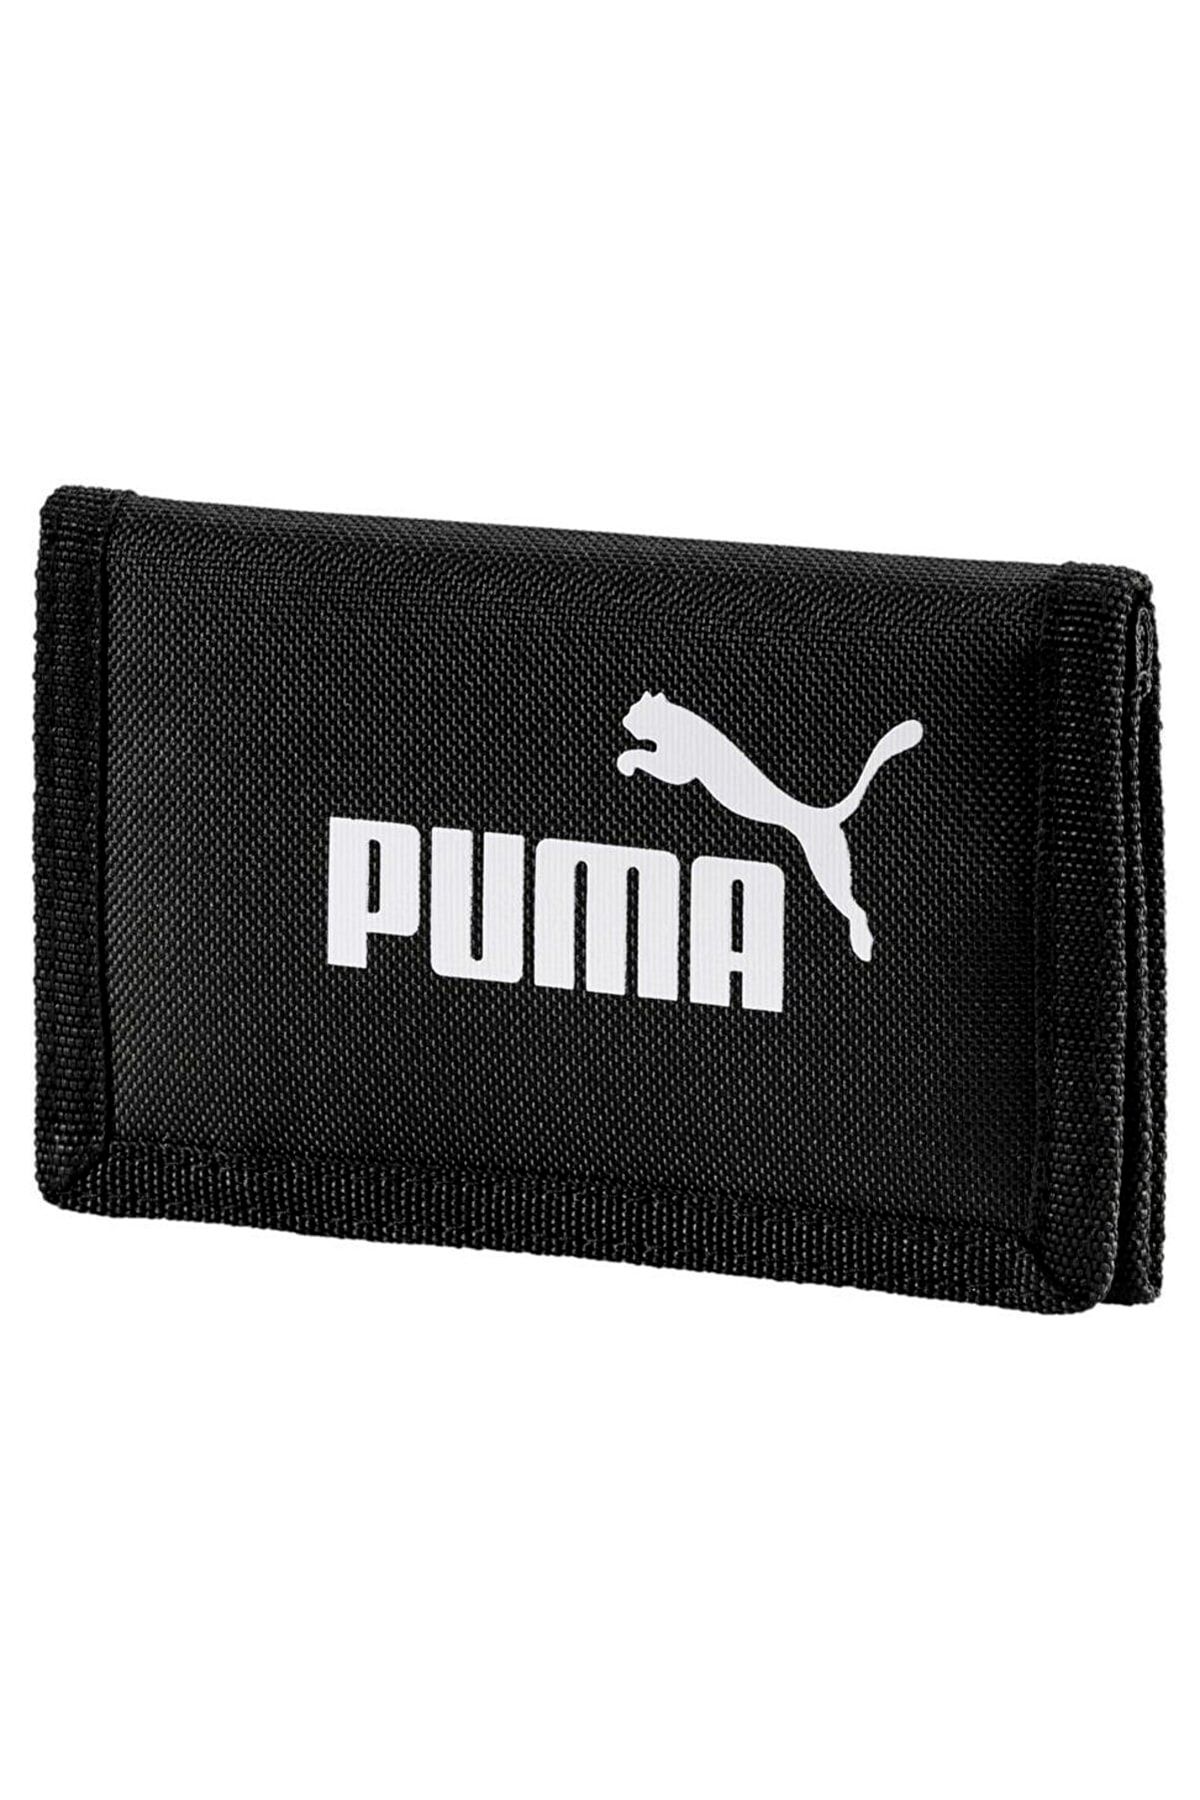 Puma Phase Wallet - Unisex Siyah Spor Cüzdan - 075617 01